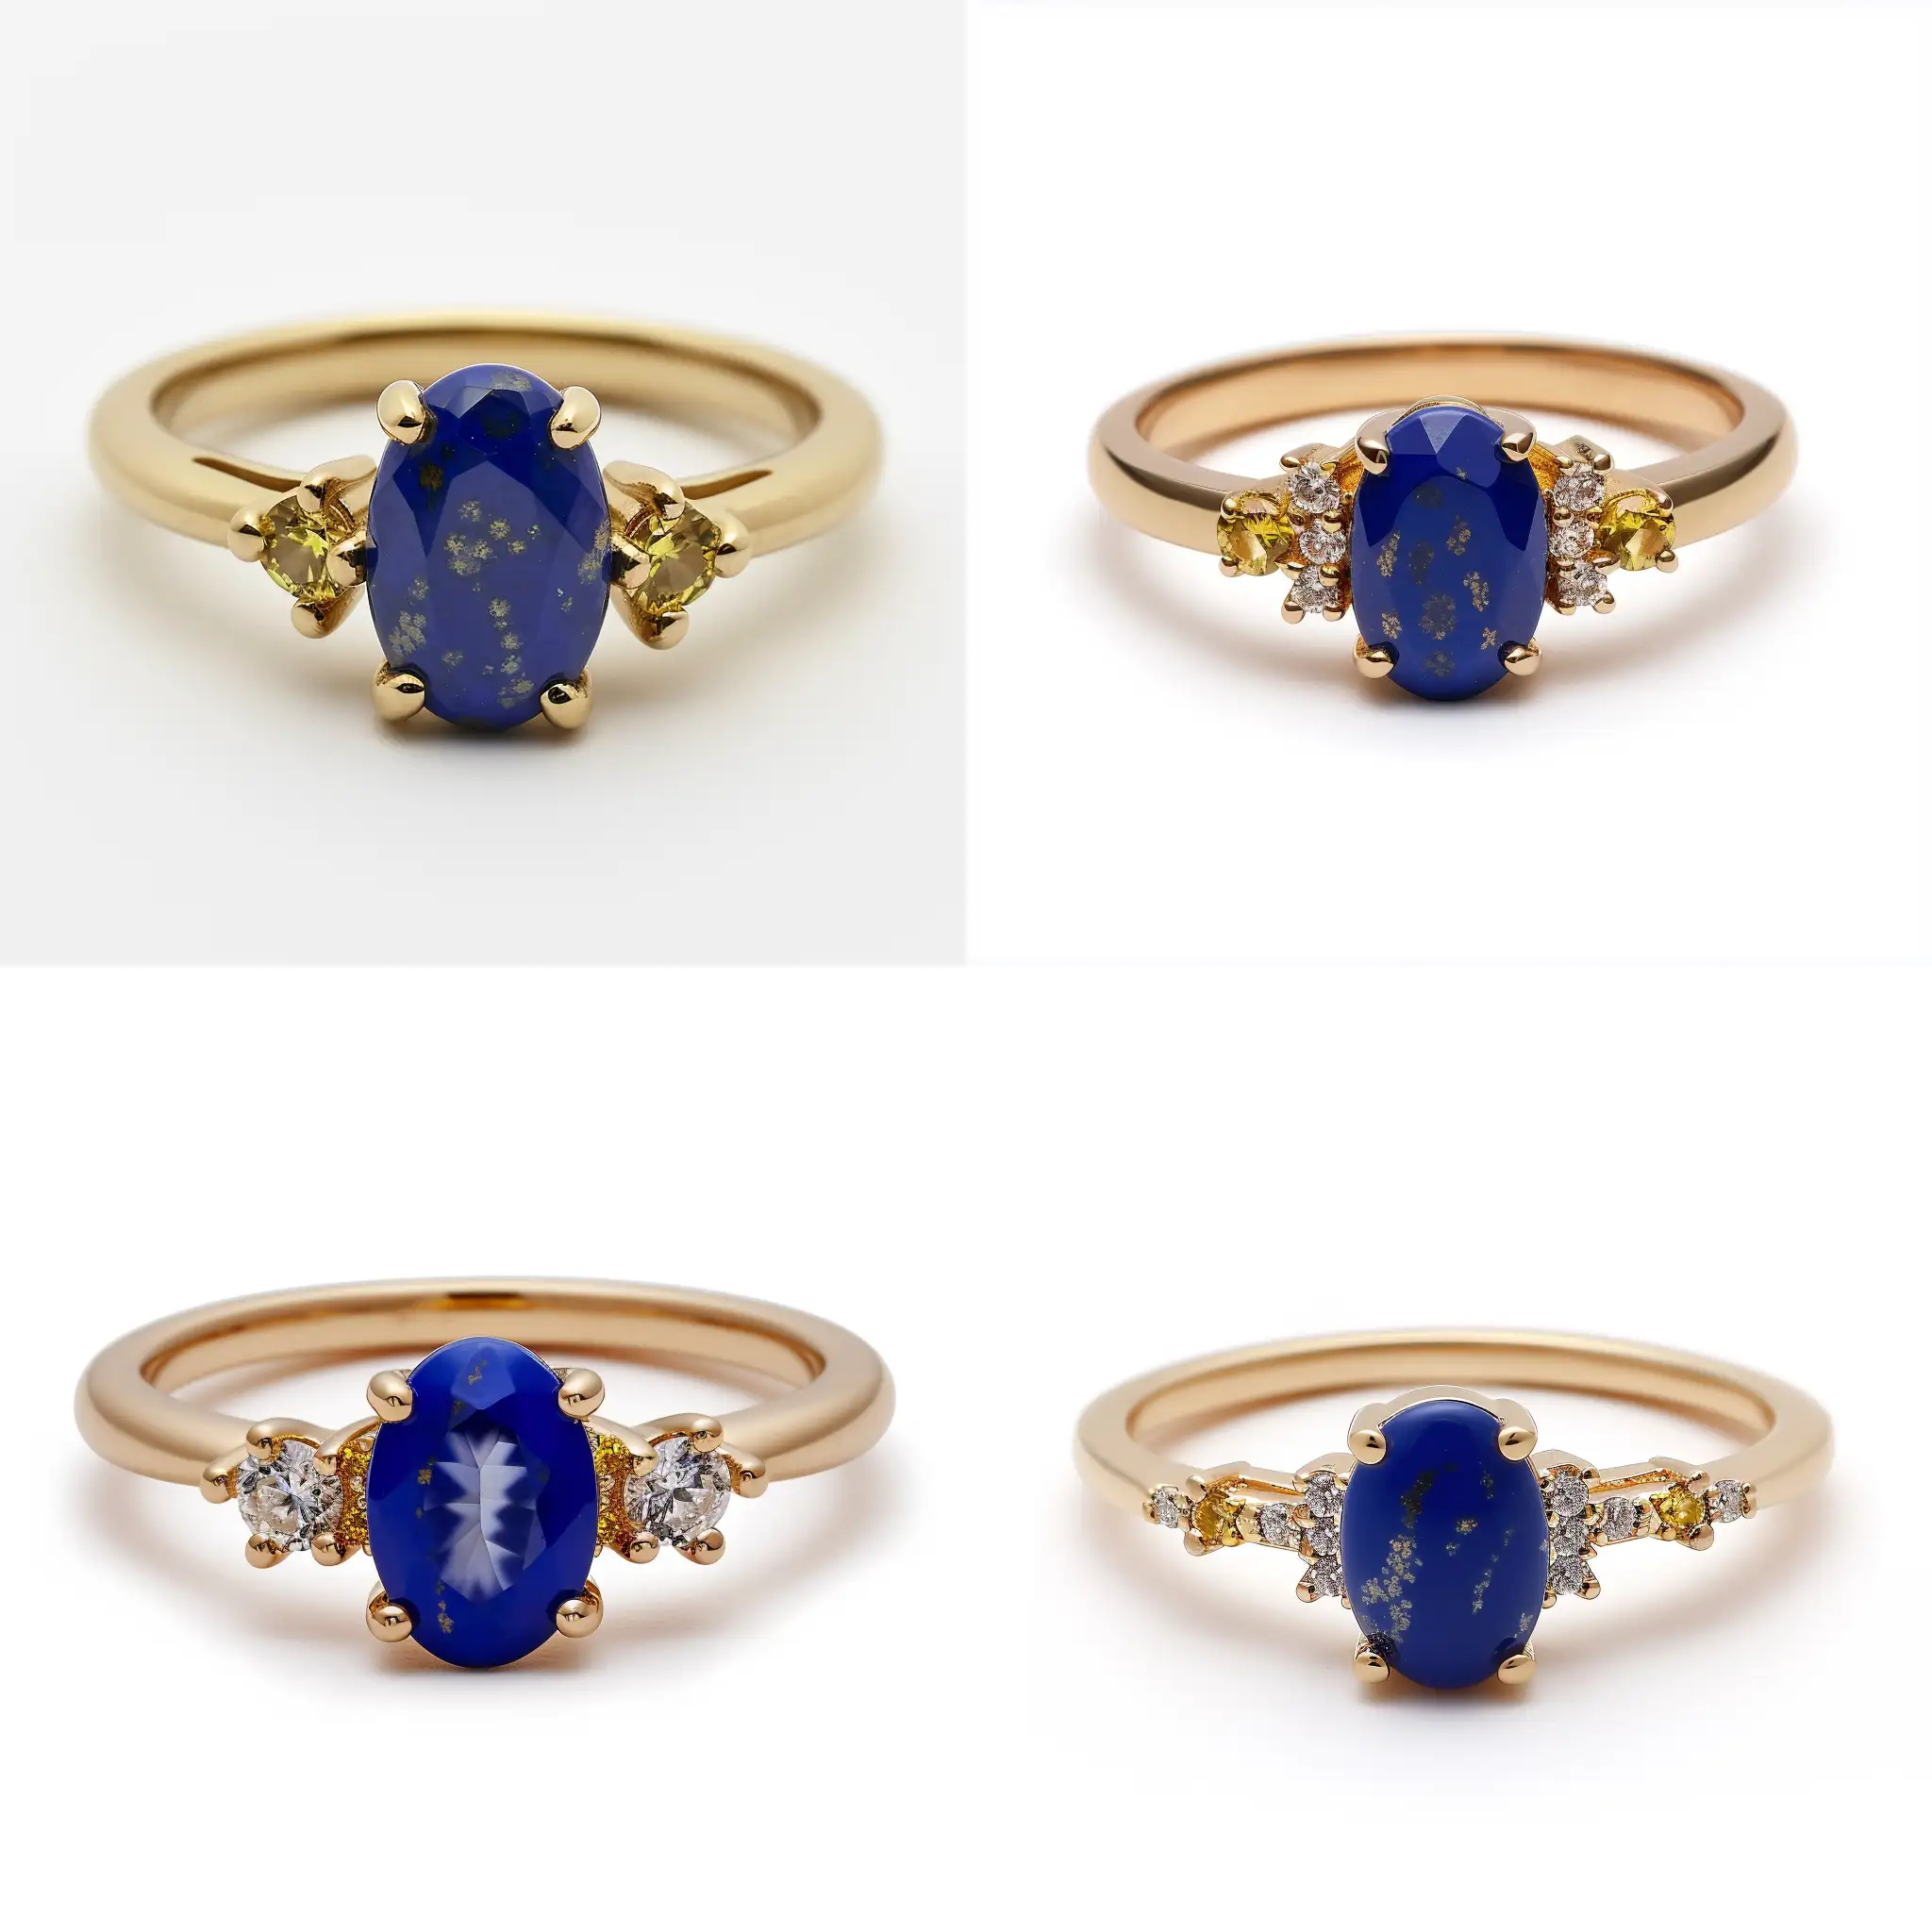 Exquisite-OvalCut-Lapis-Lazuli-Gold-Ring-with-Yellow-Diamonds